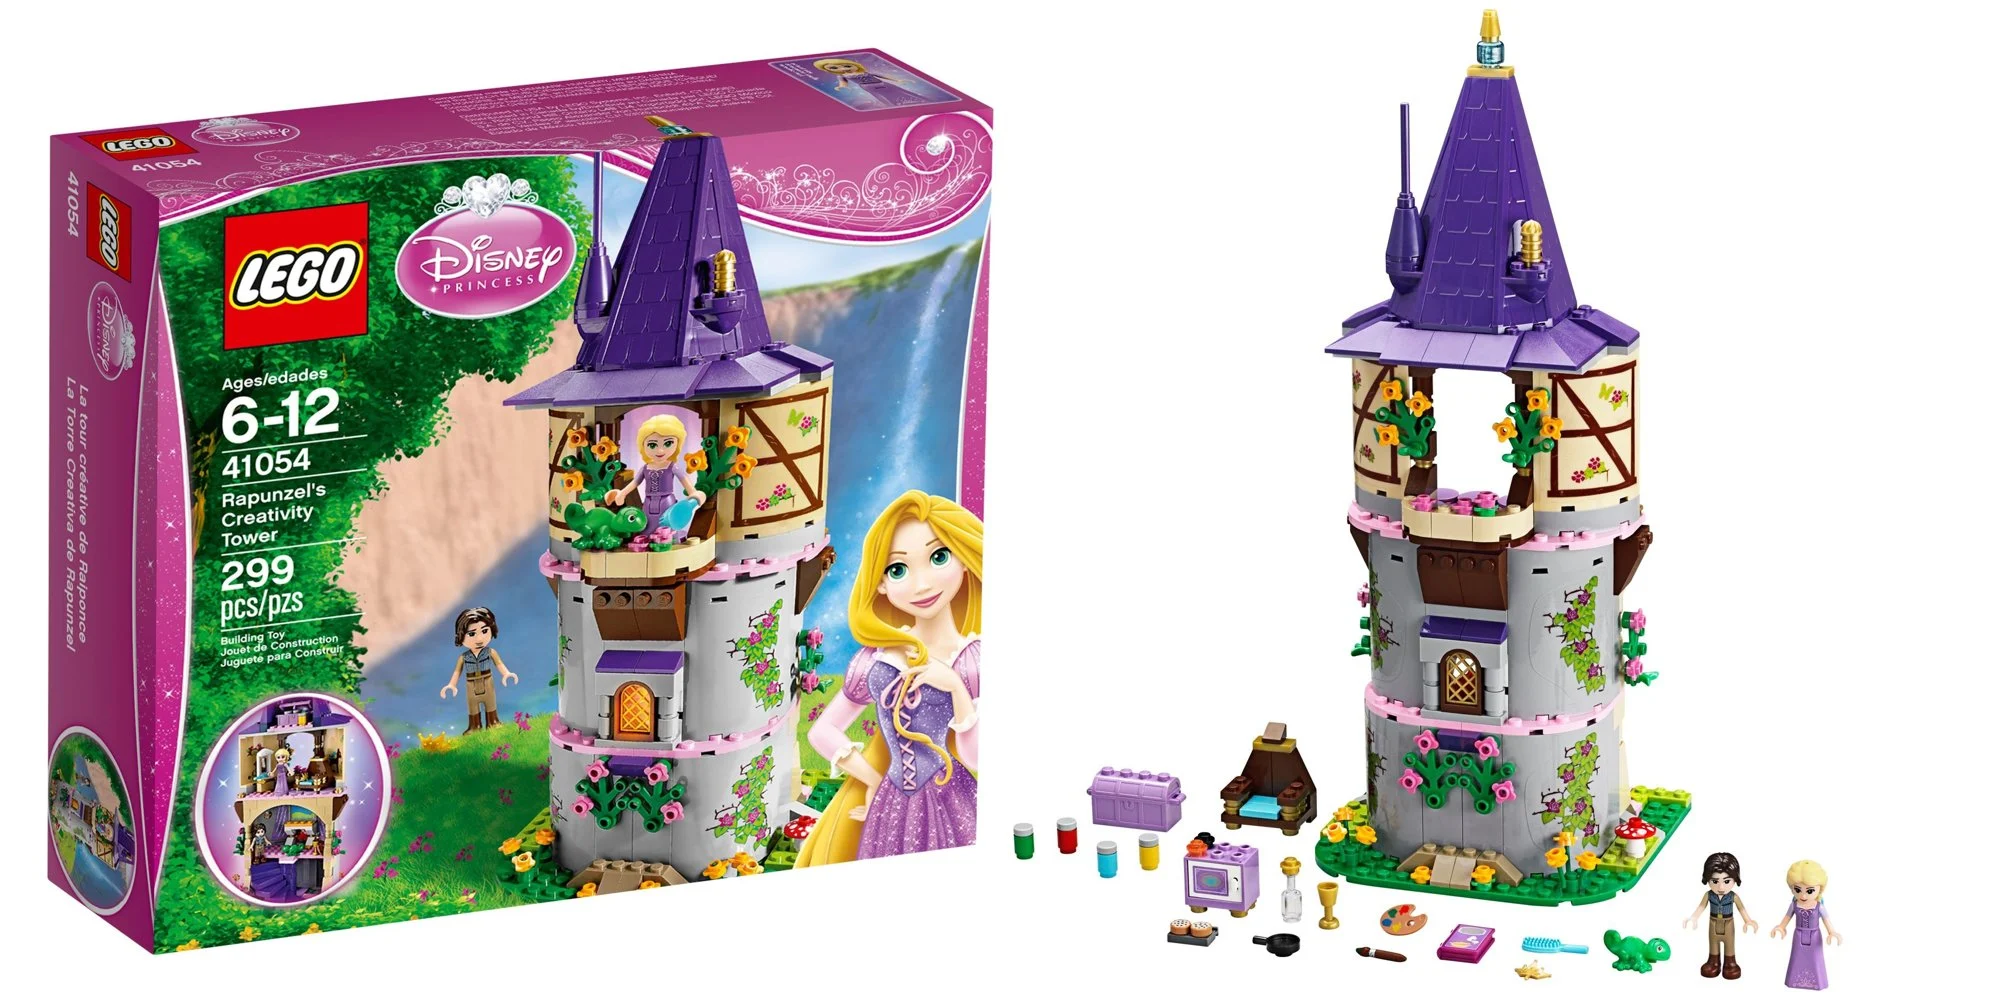 Best LEGO Disney sets - Rapunzel's Creativity Tower